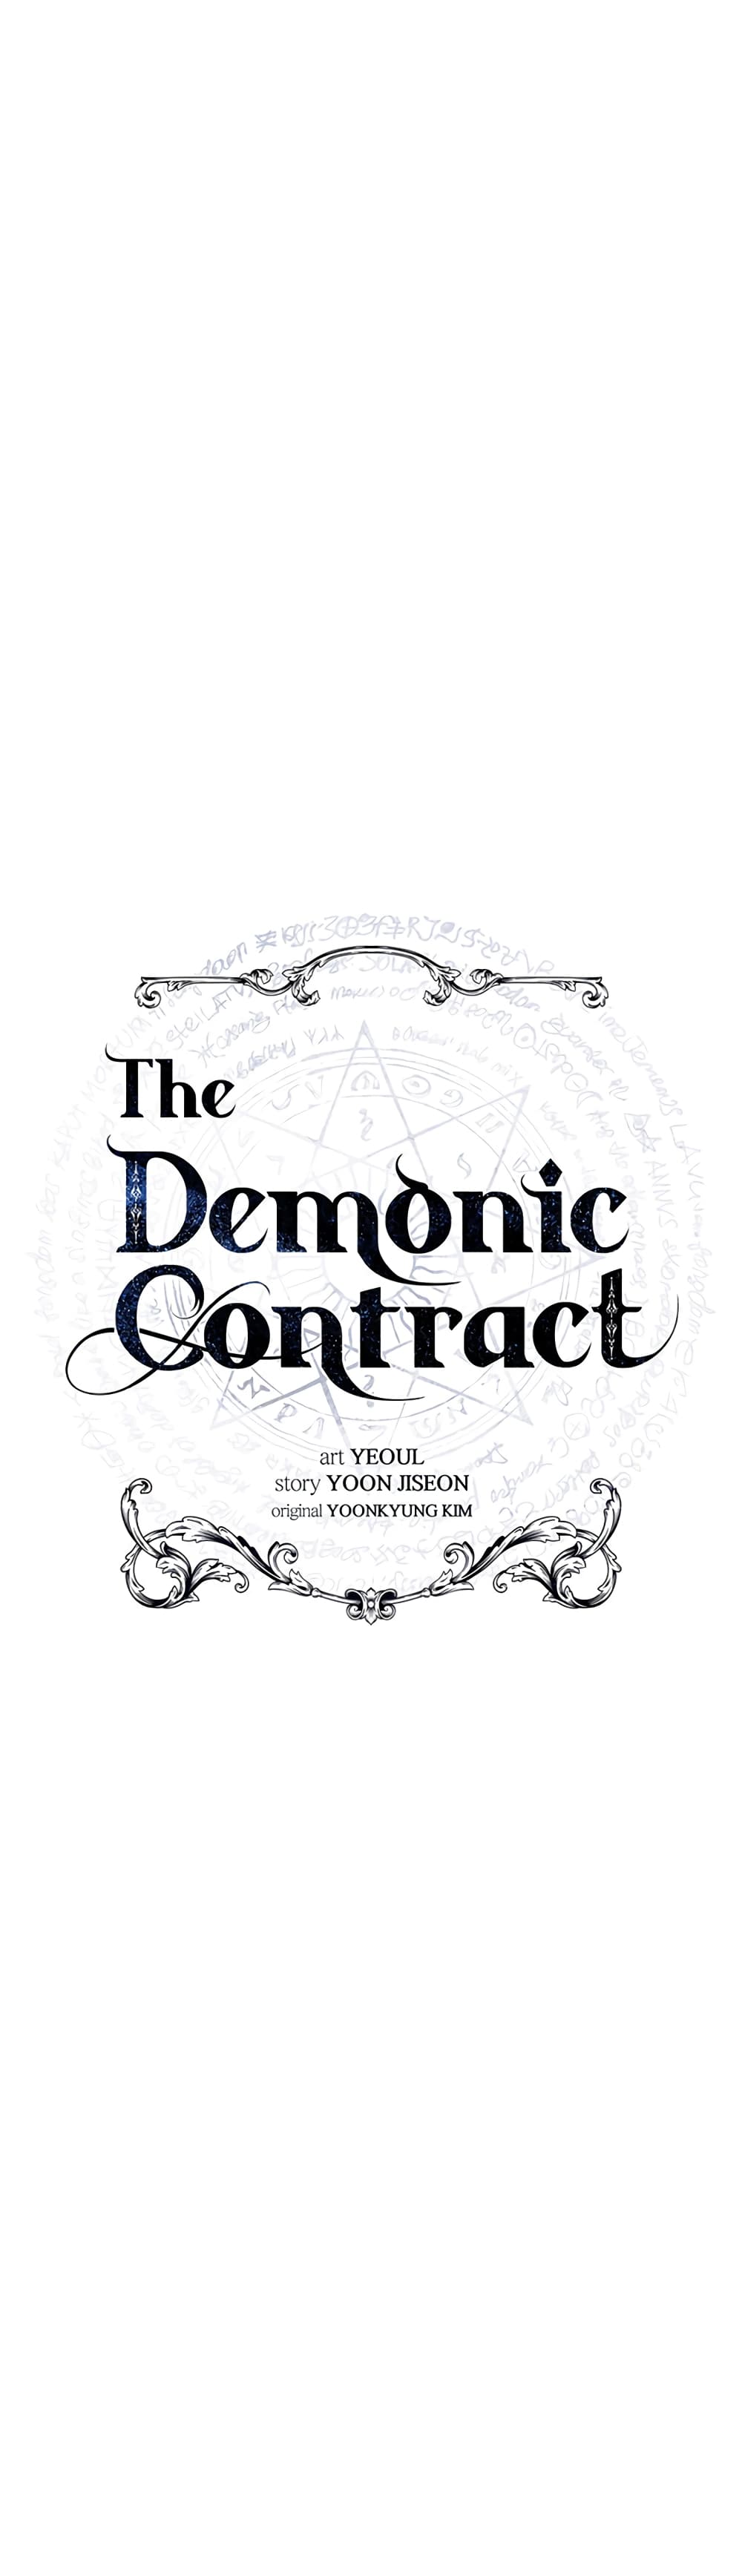 The Demonic Contract 39 (10)